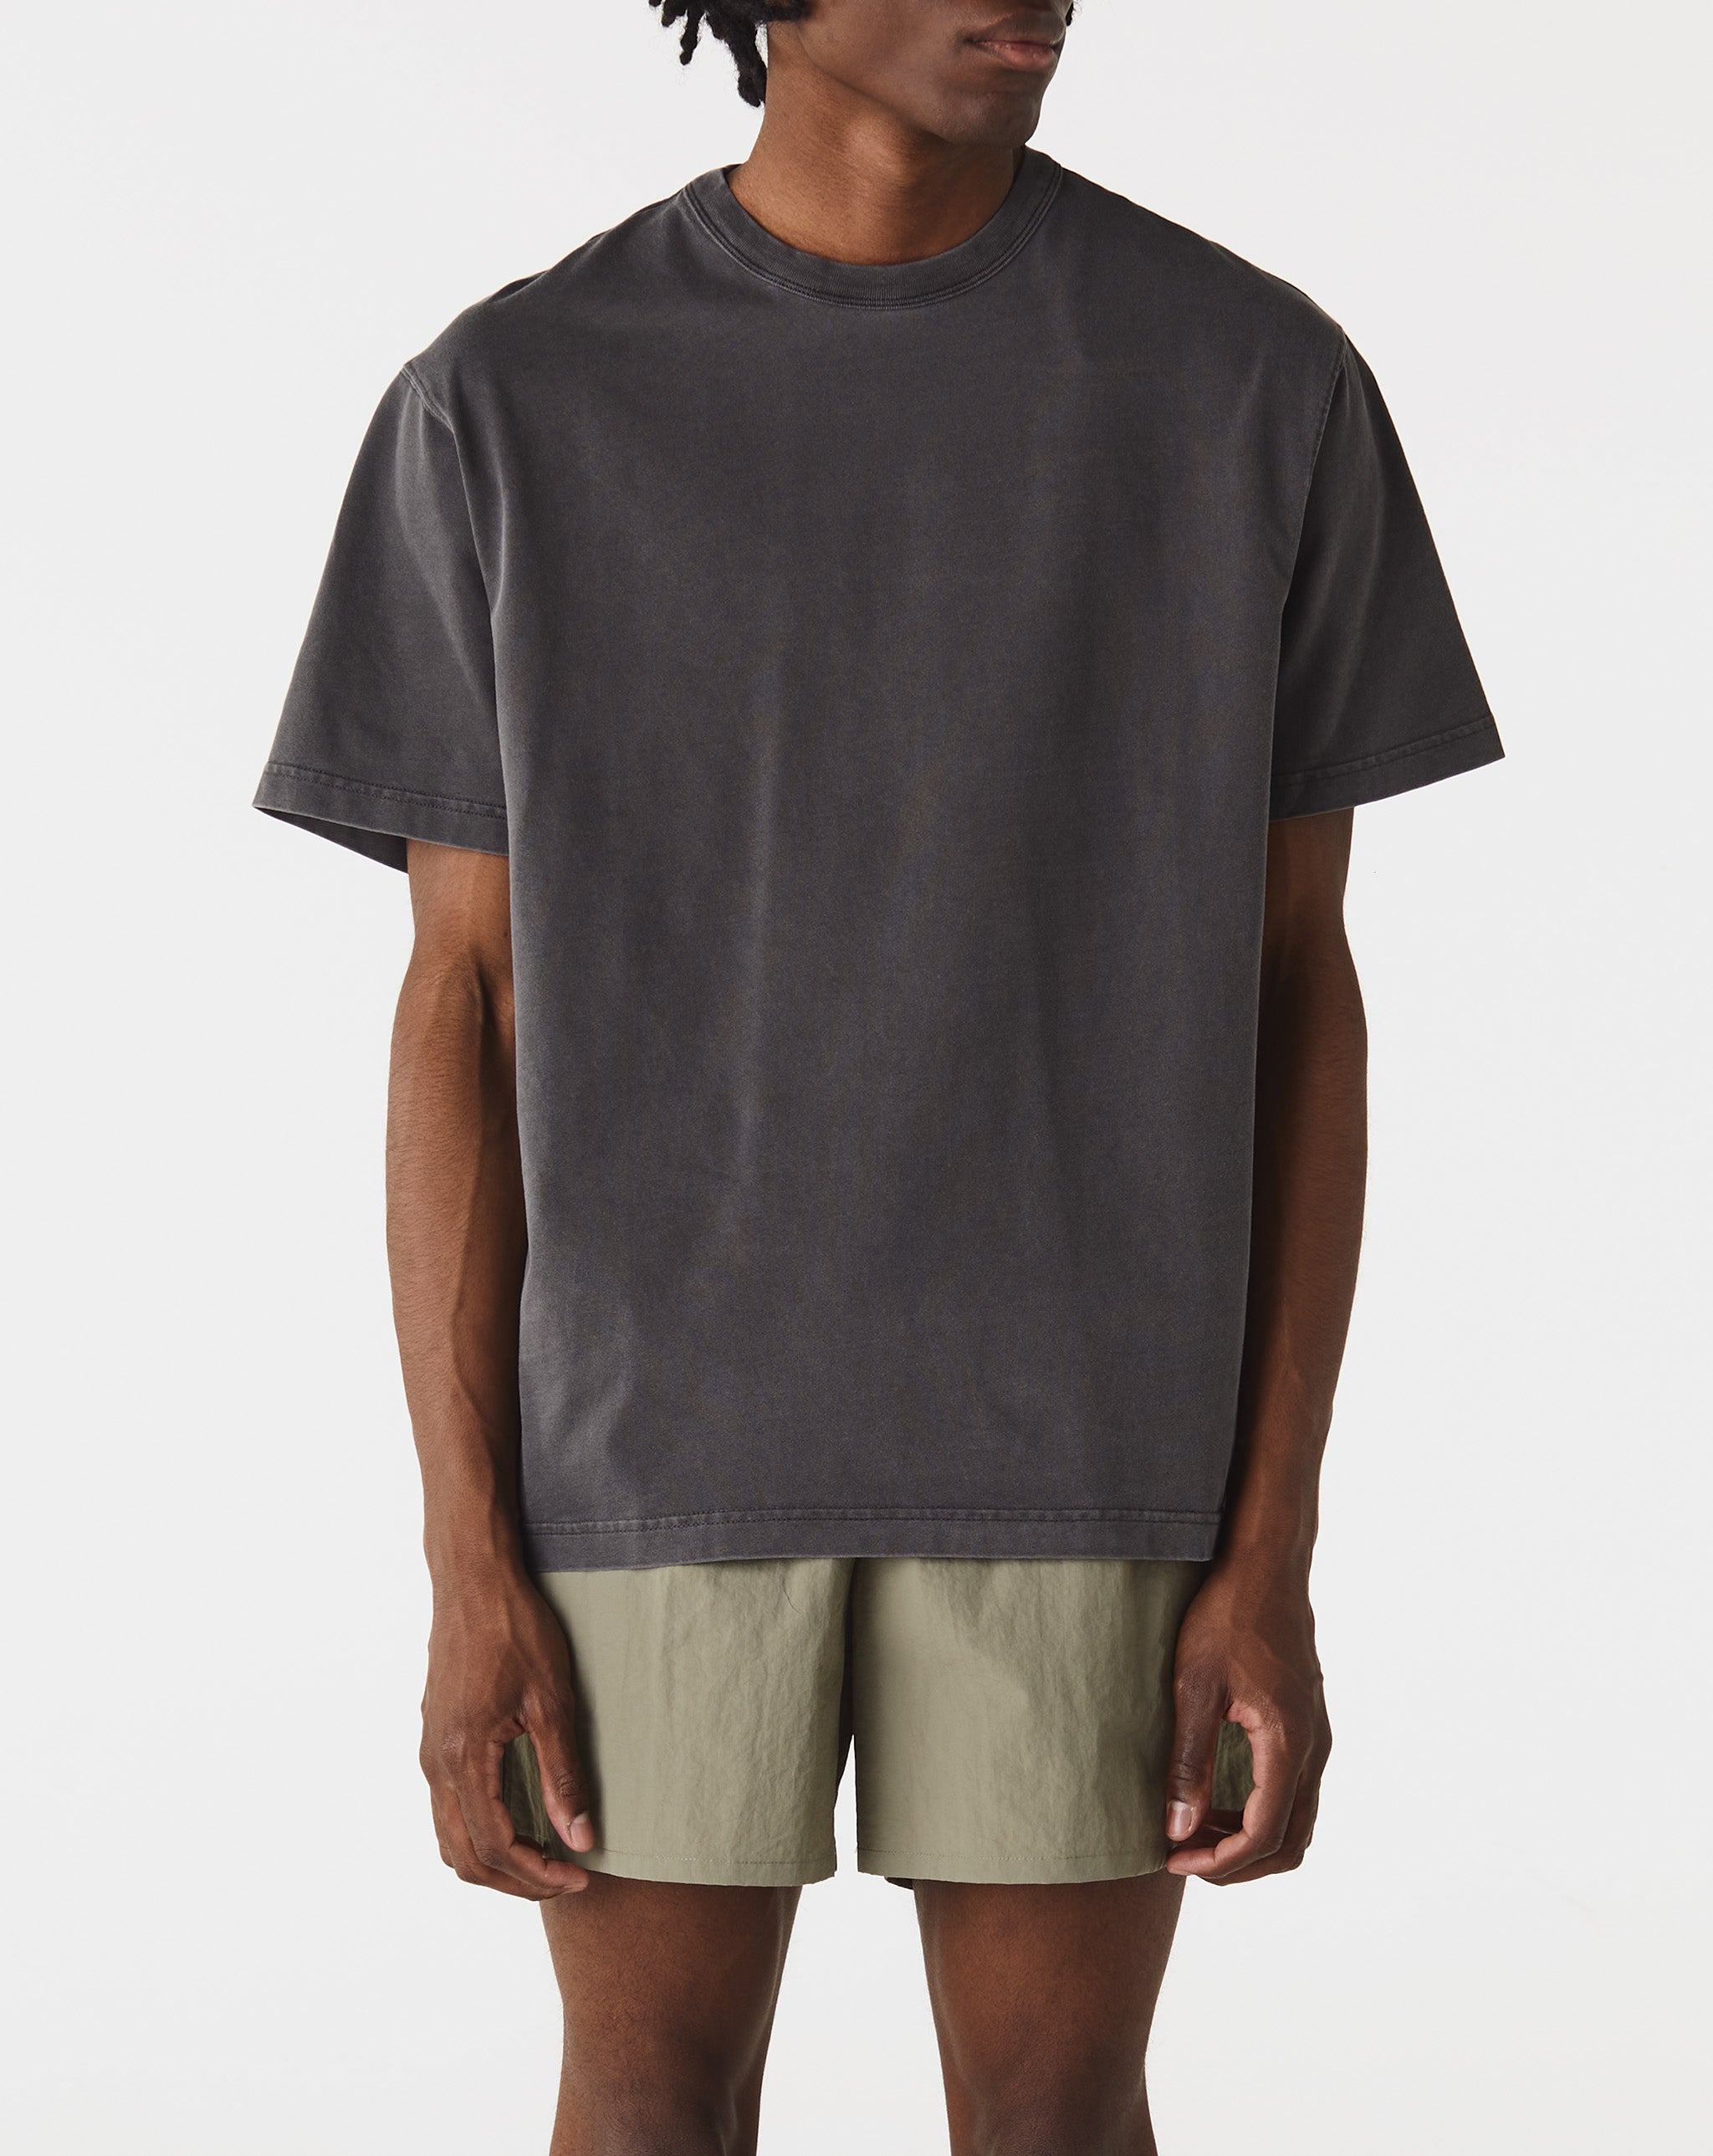 Carhartt WIP Taos T-Shirt  - XHIBITION